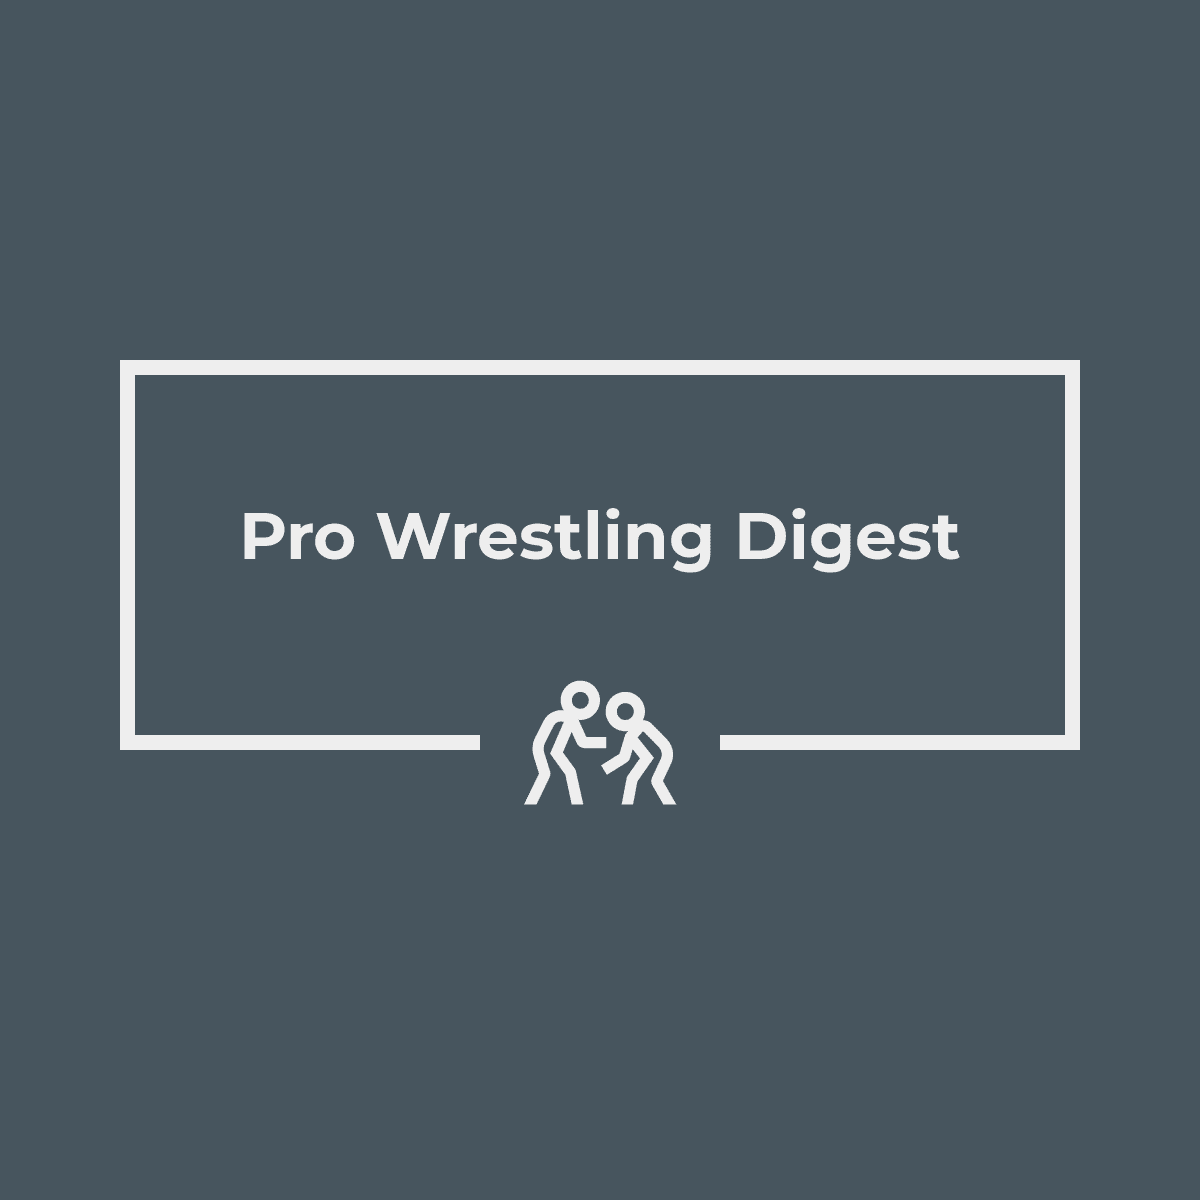 Pro Wrestling Digest #2 - by Holden Craig